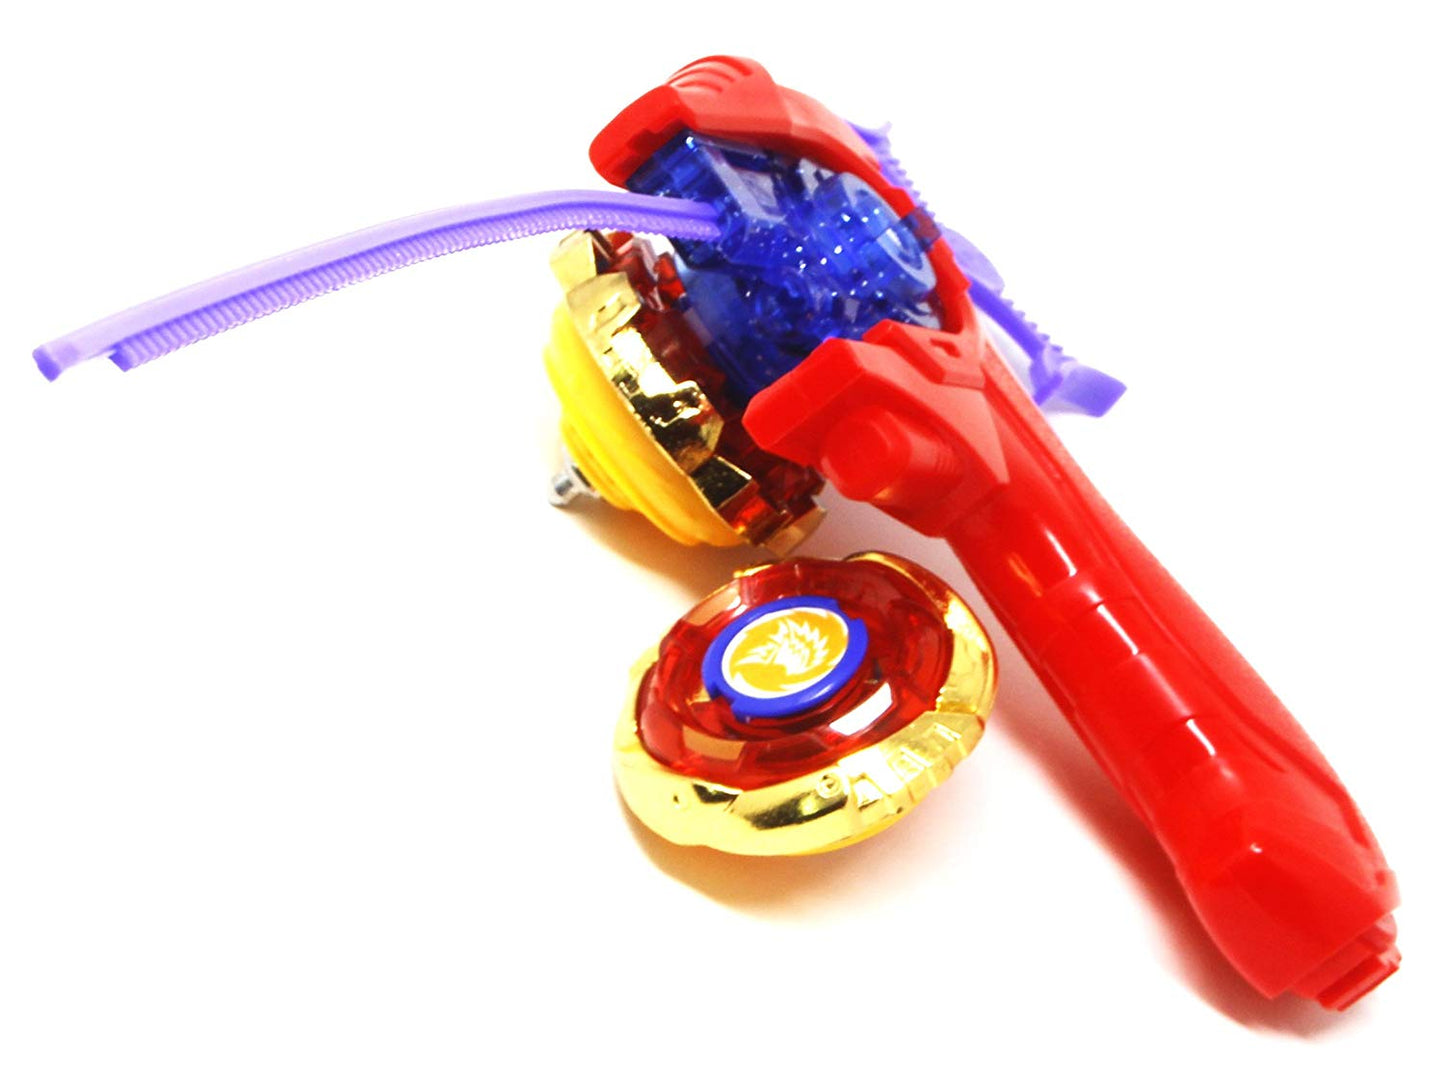 Invincible Fight Battle 4D Top w/ Launcher 2 in 1 Set Toy (Multicolor)